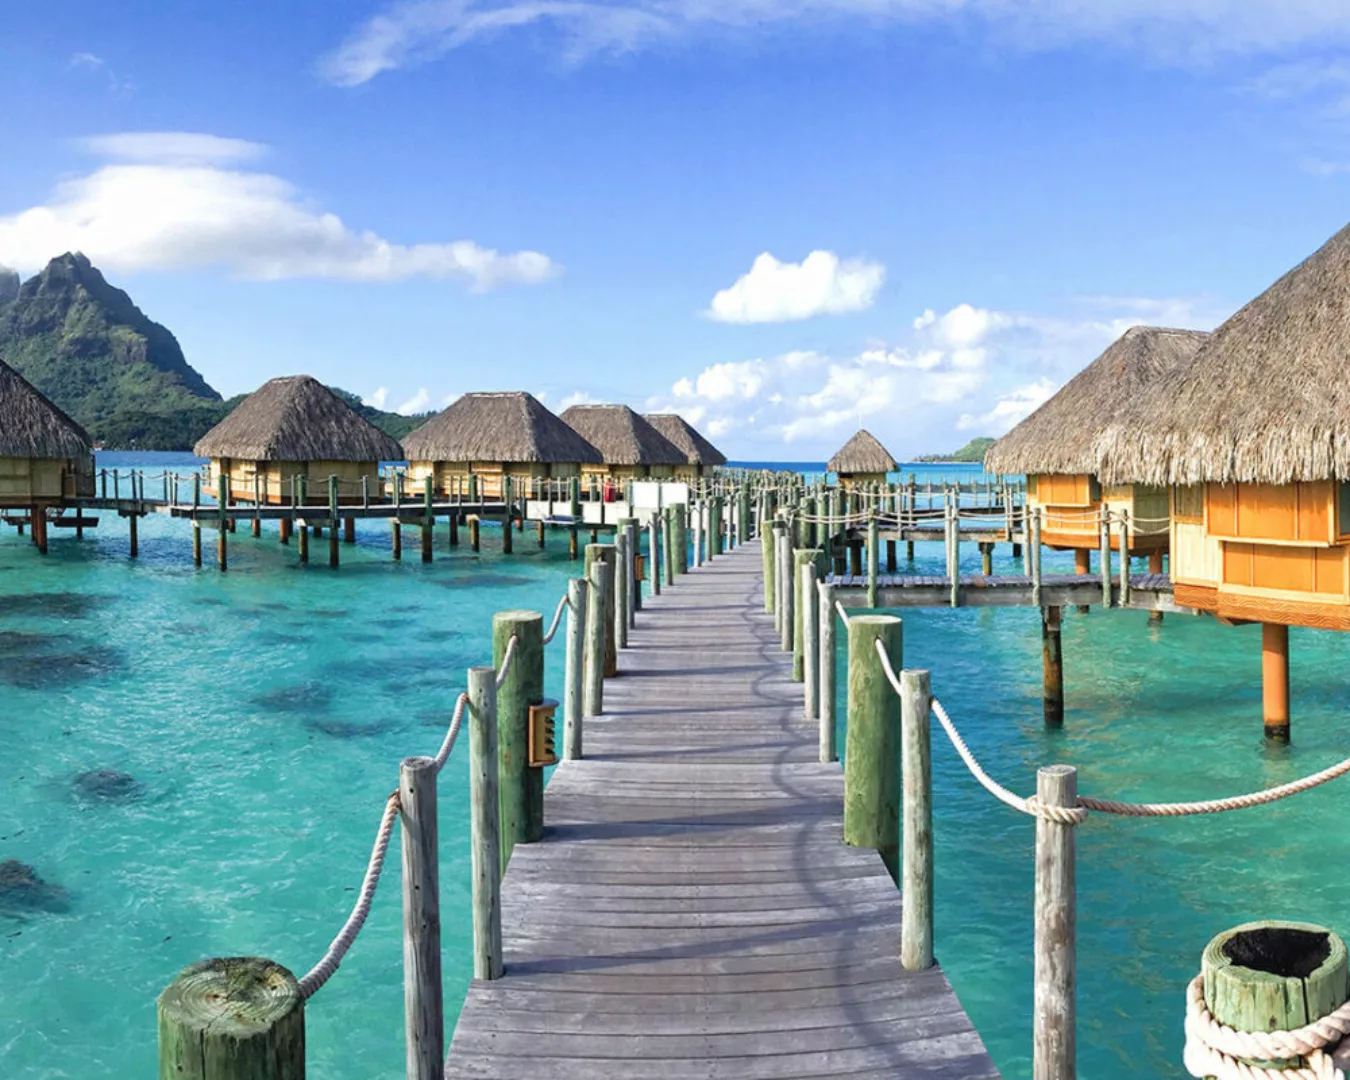 Fototapete "TahitiBungalow" 4,00x2,50 m / Glattvlies Perlmutt günstig online kaufen